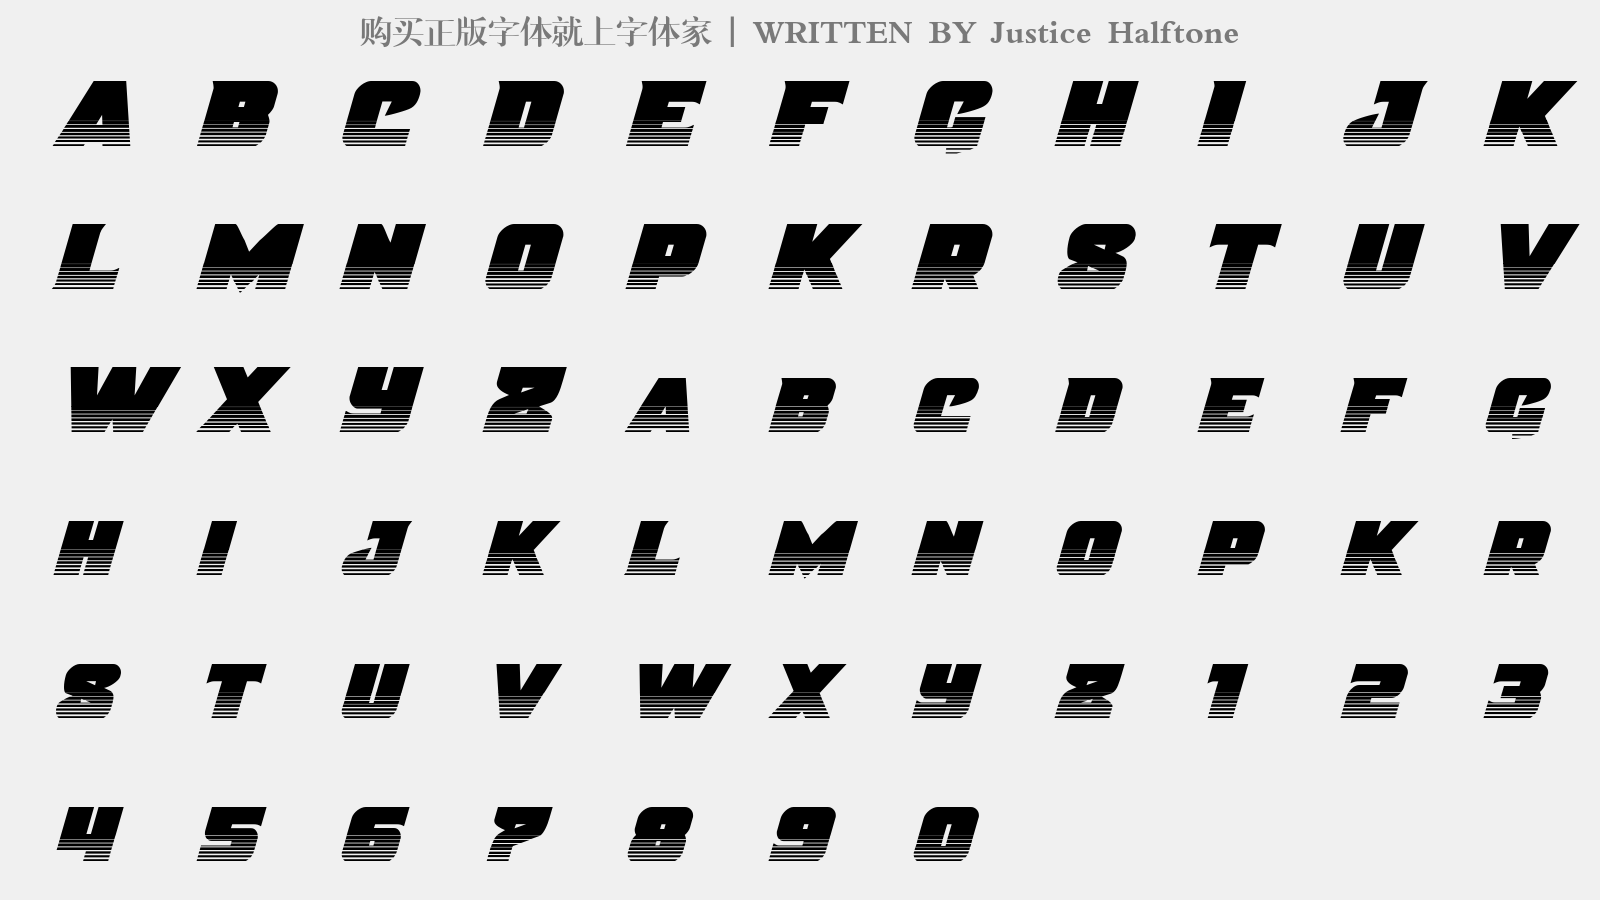 Justice Halftone - 大写字母/小写字母/数字